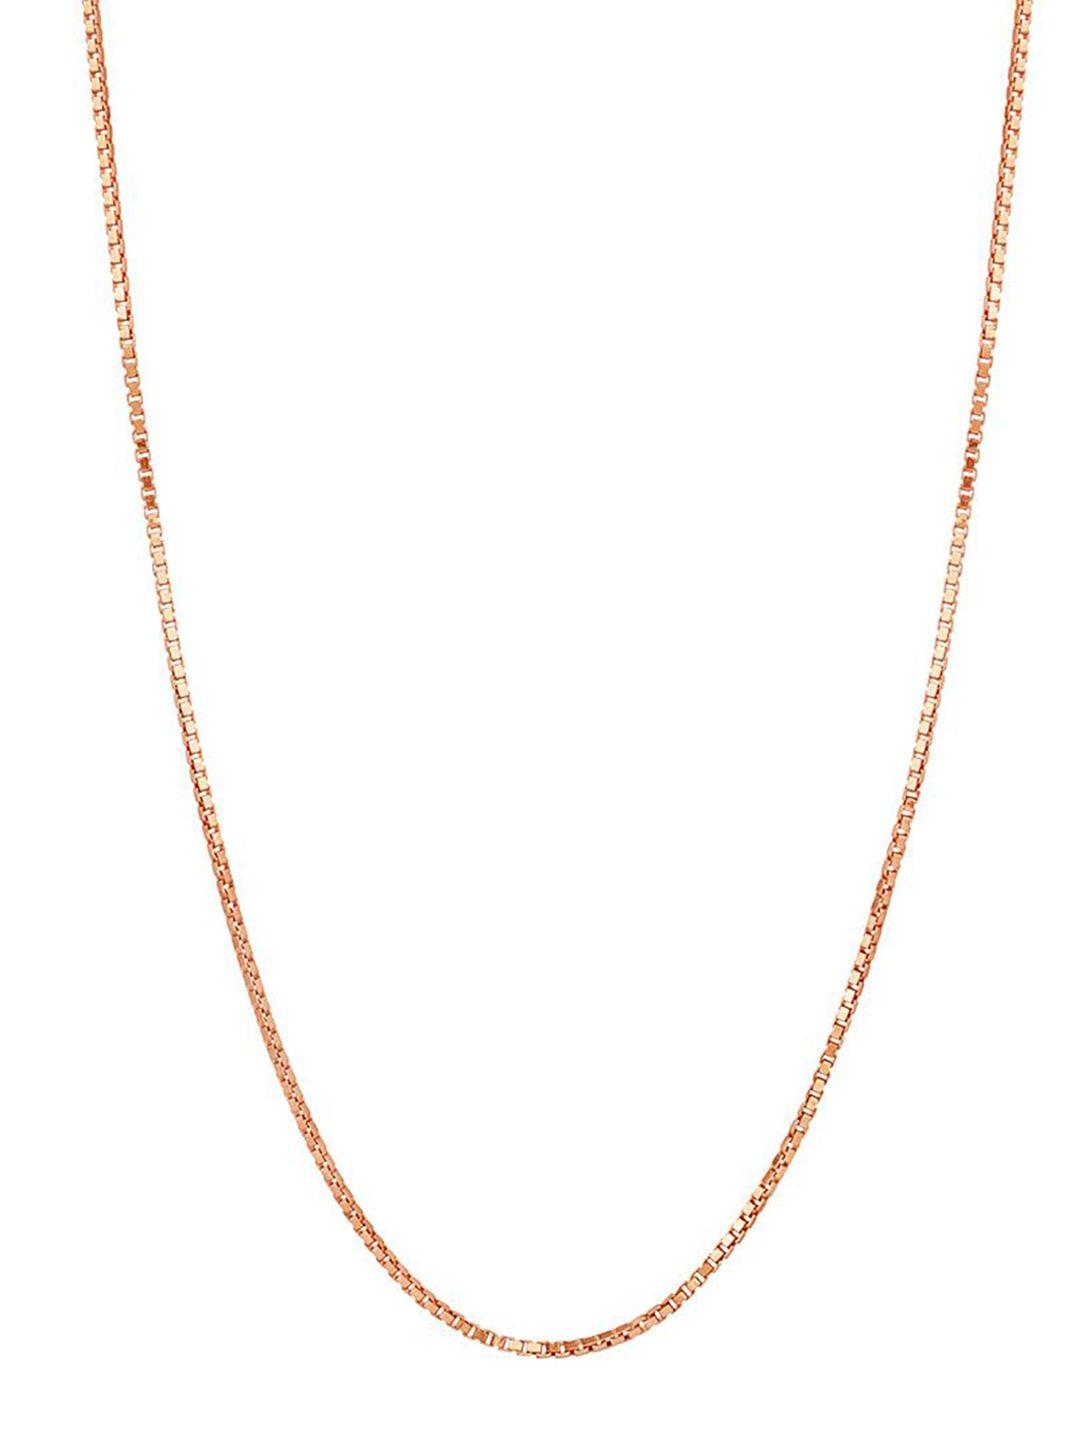 candere a kalyan jewellers company 18kt bis hallmark rose gold chain-2.0 gm